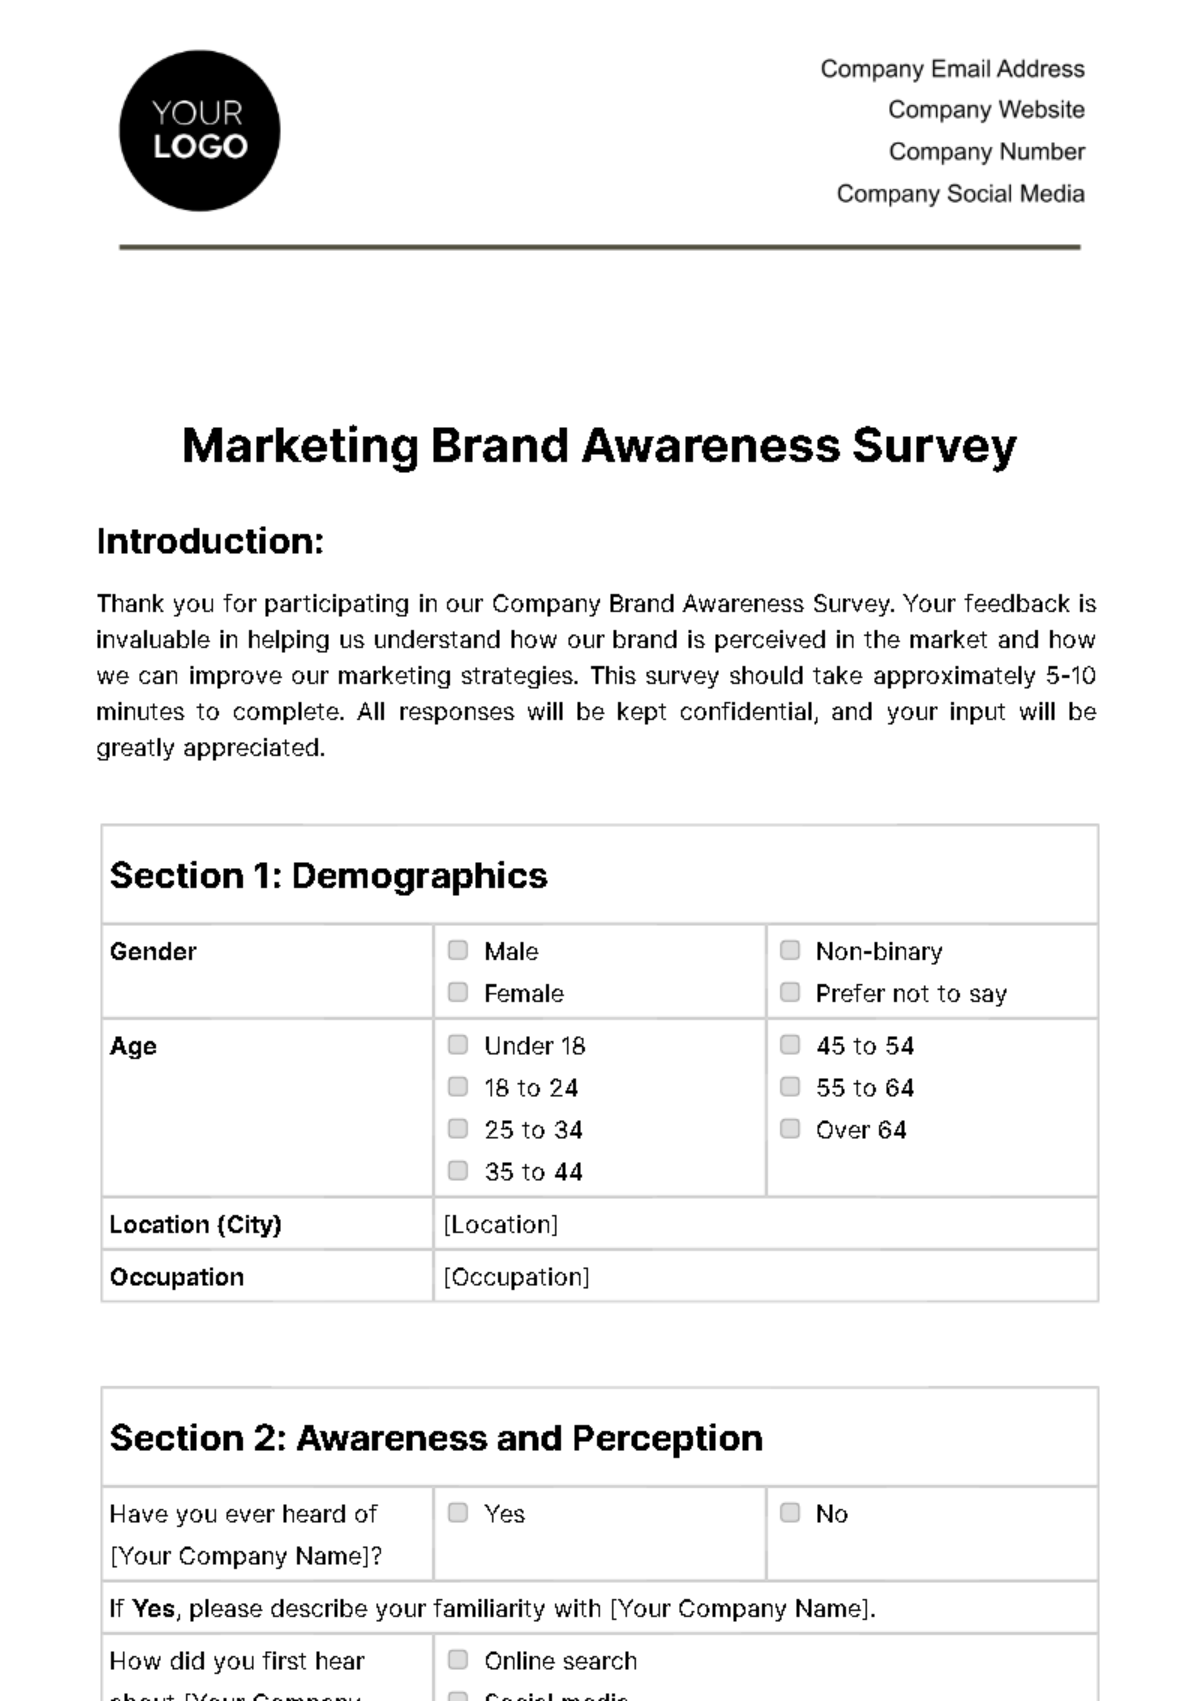 Marketing Brand Awareness Survey Template